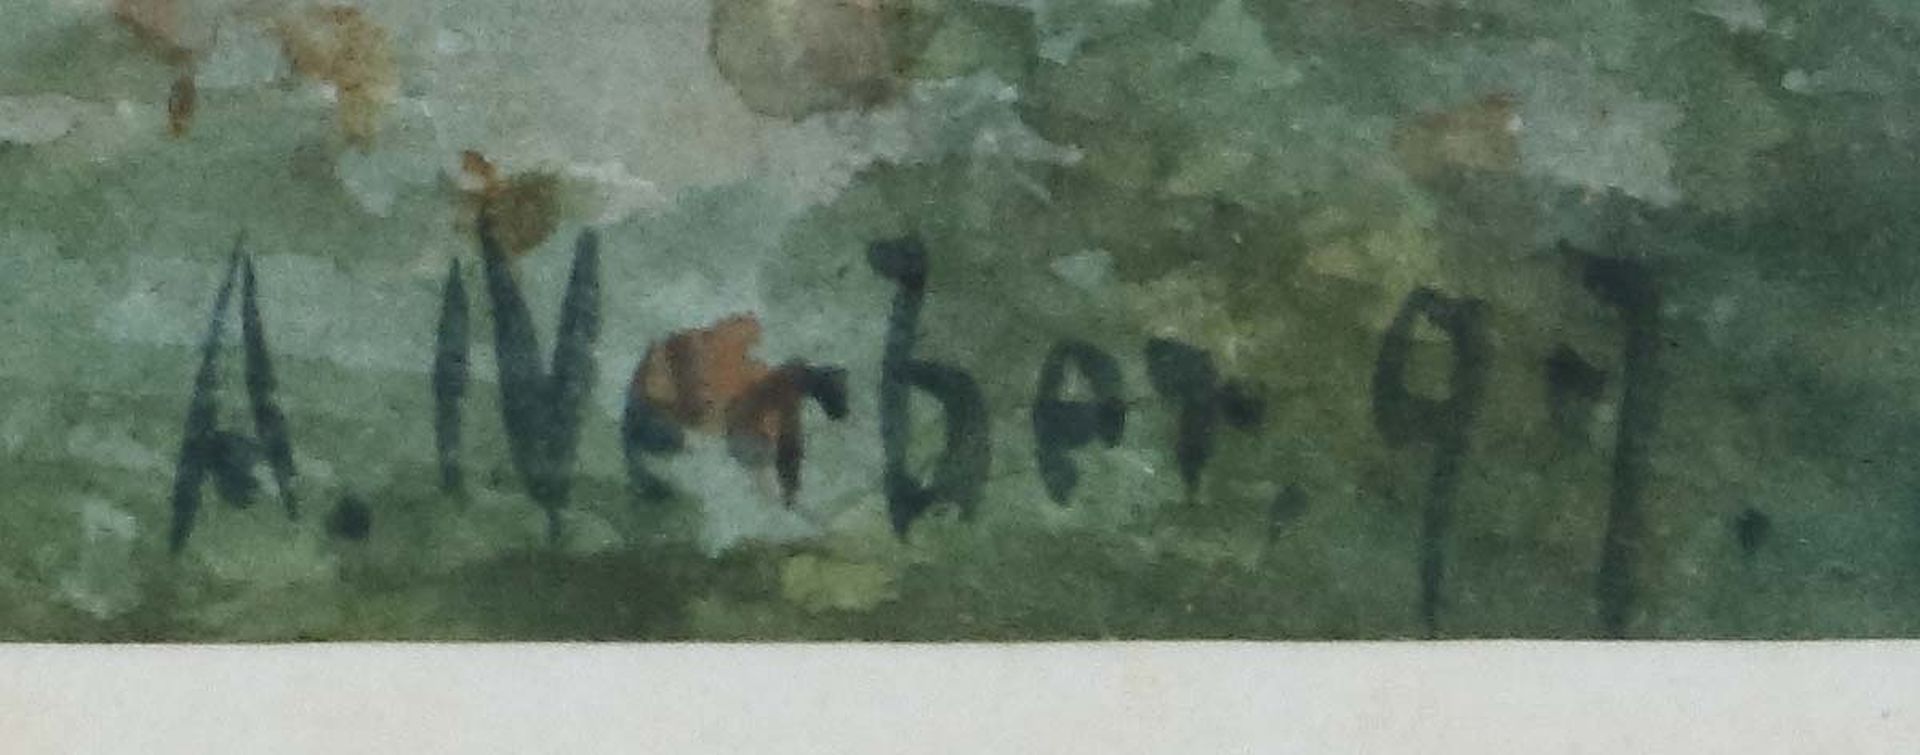 Neber, Anton 1851 - 1920. "Sommerliche - Image 3 of 3